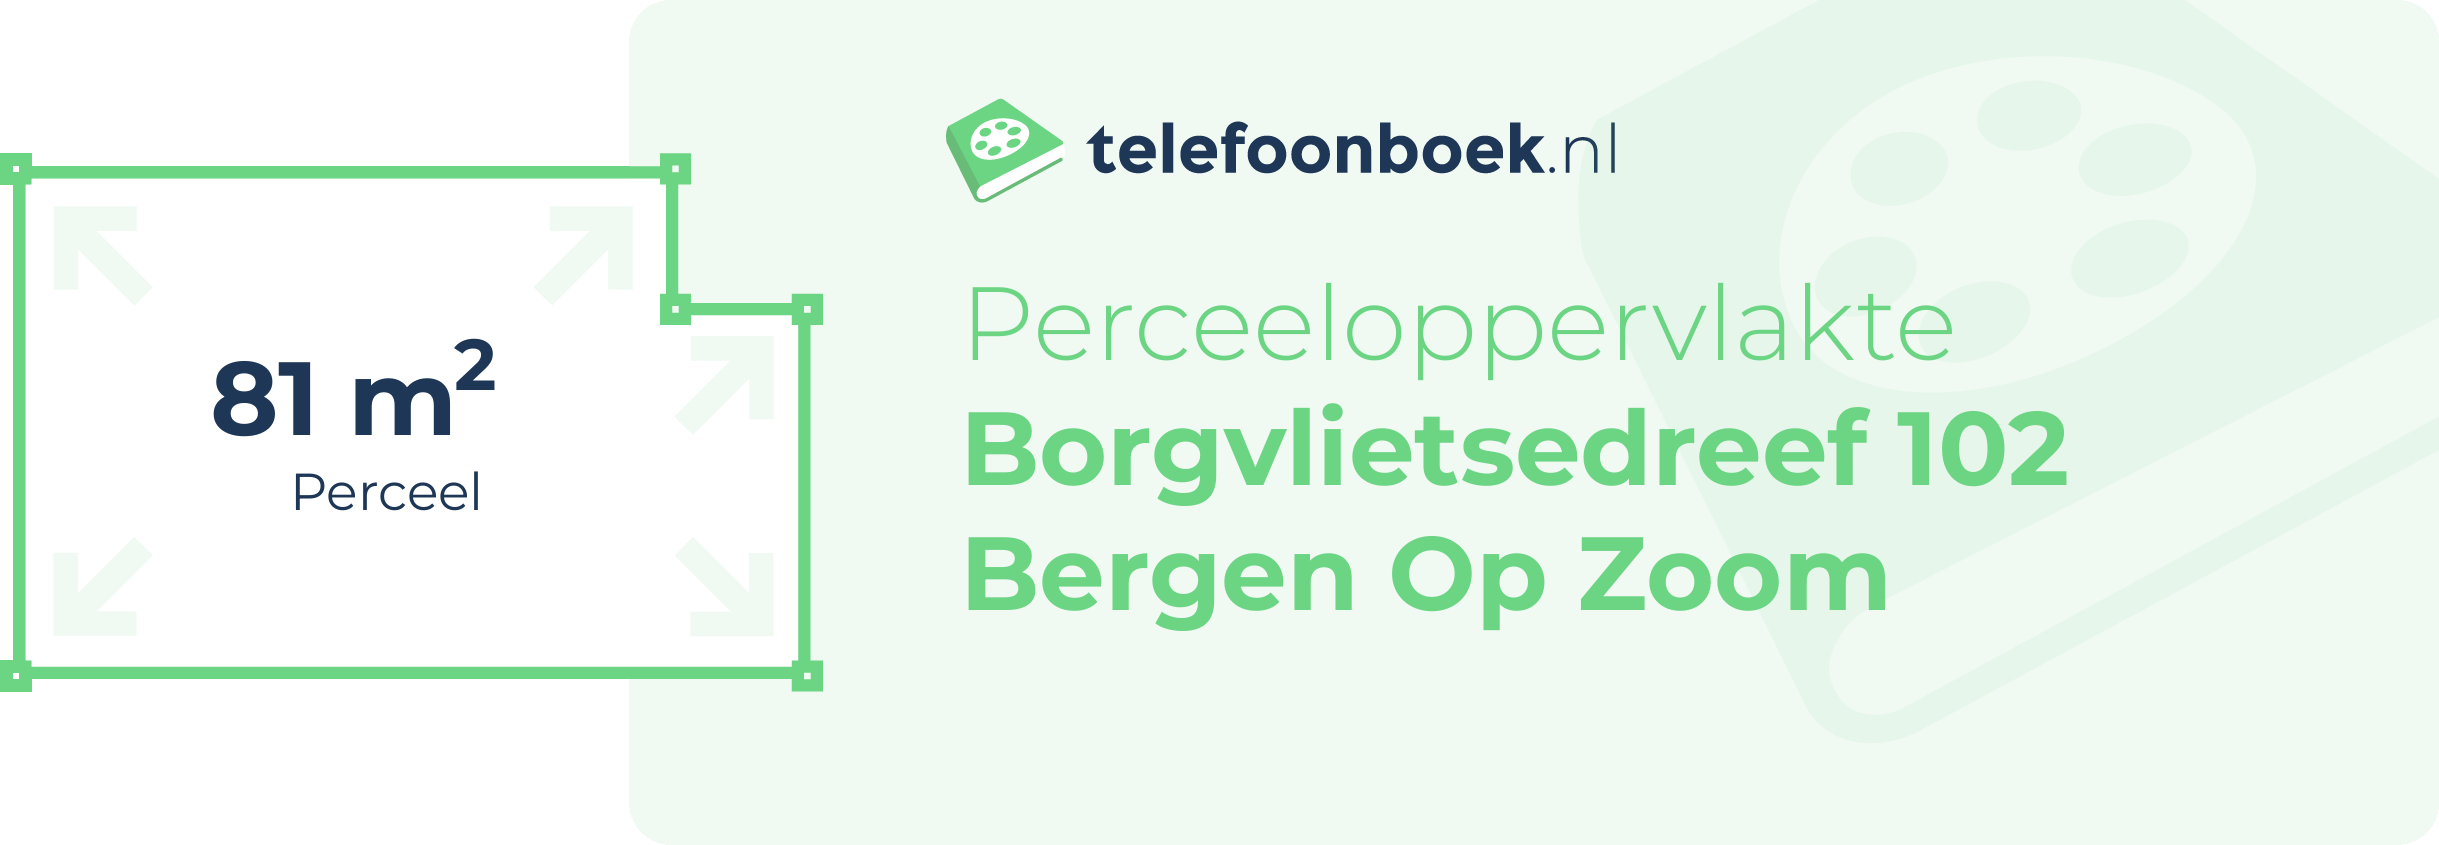 Perceeloppervlakte Borgvlietsedreef 102 Bergen Op Zoom